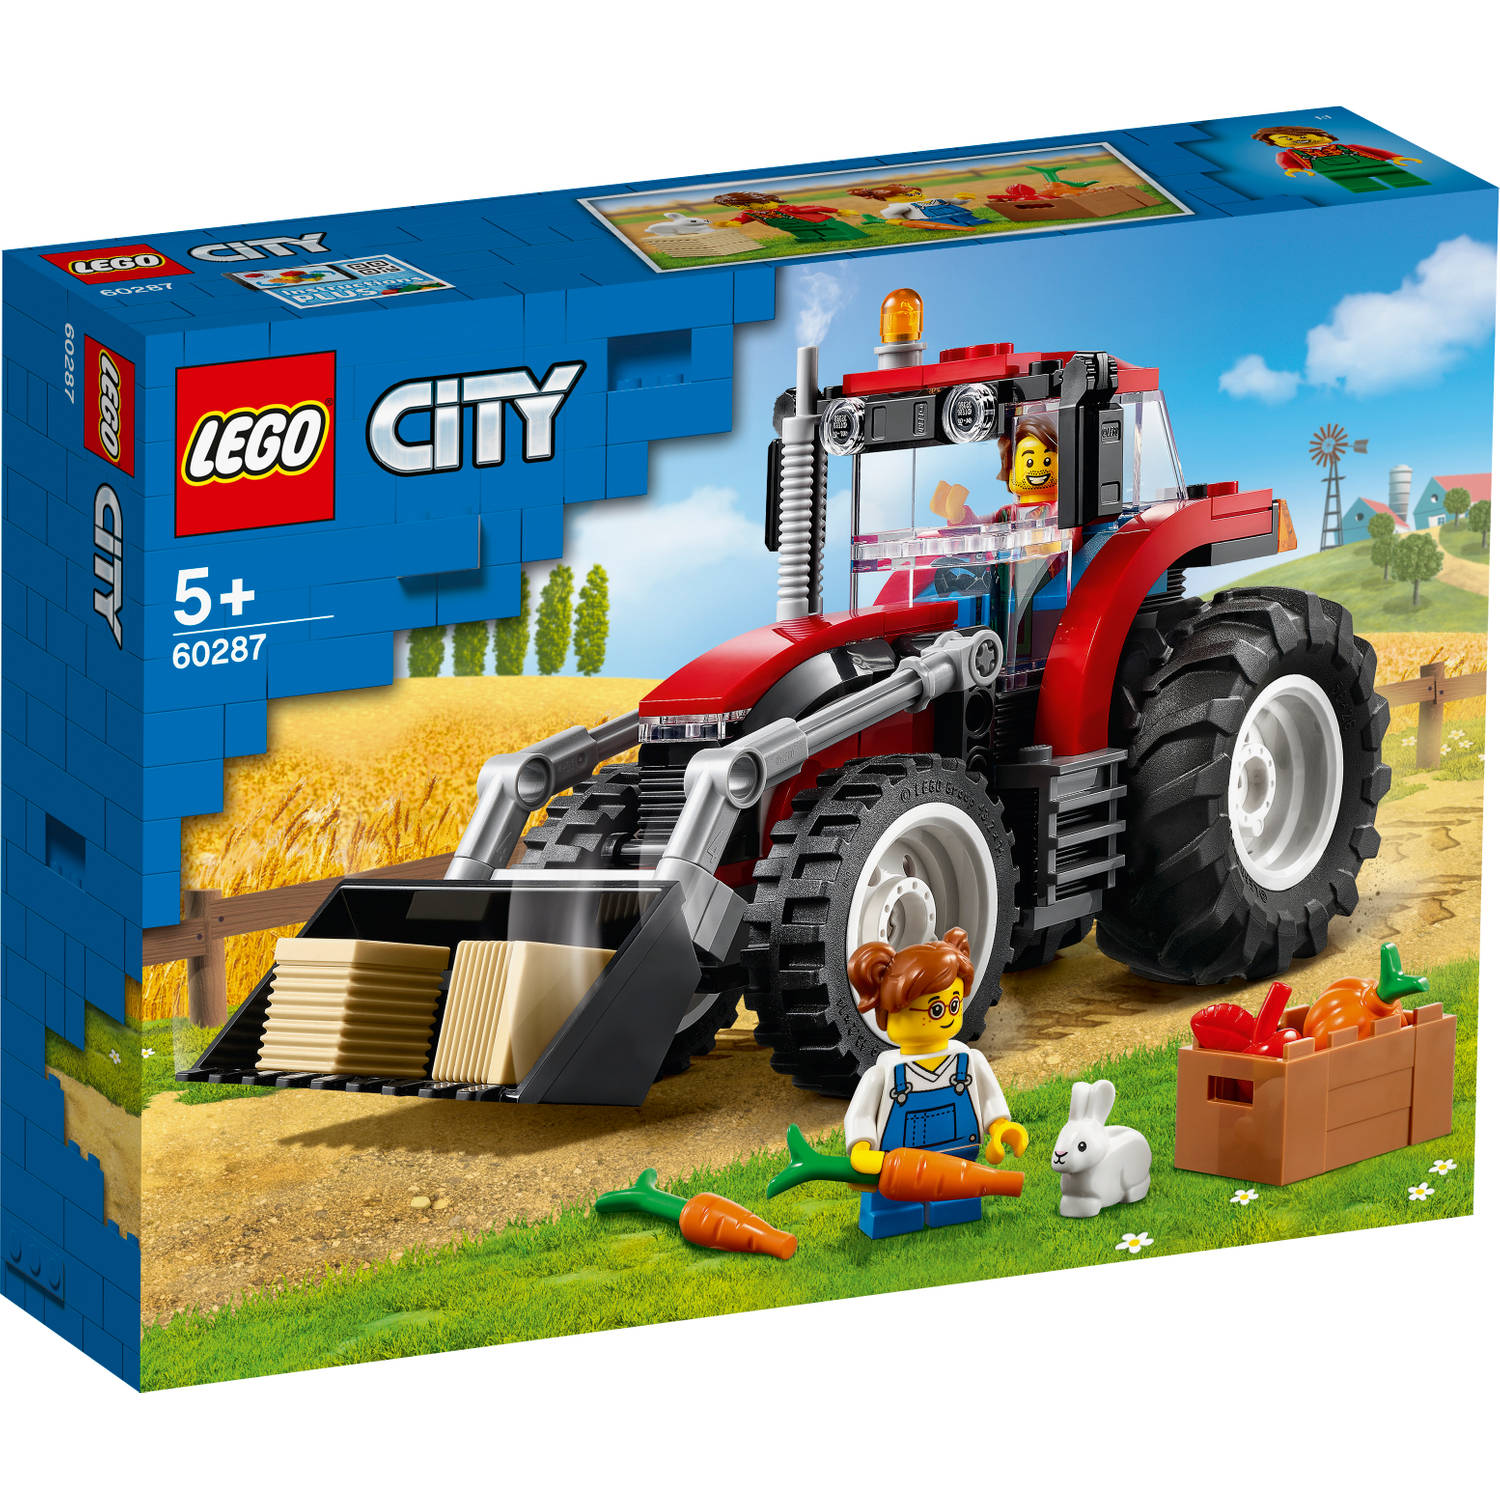 City tractor 60287 Blokker